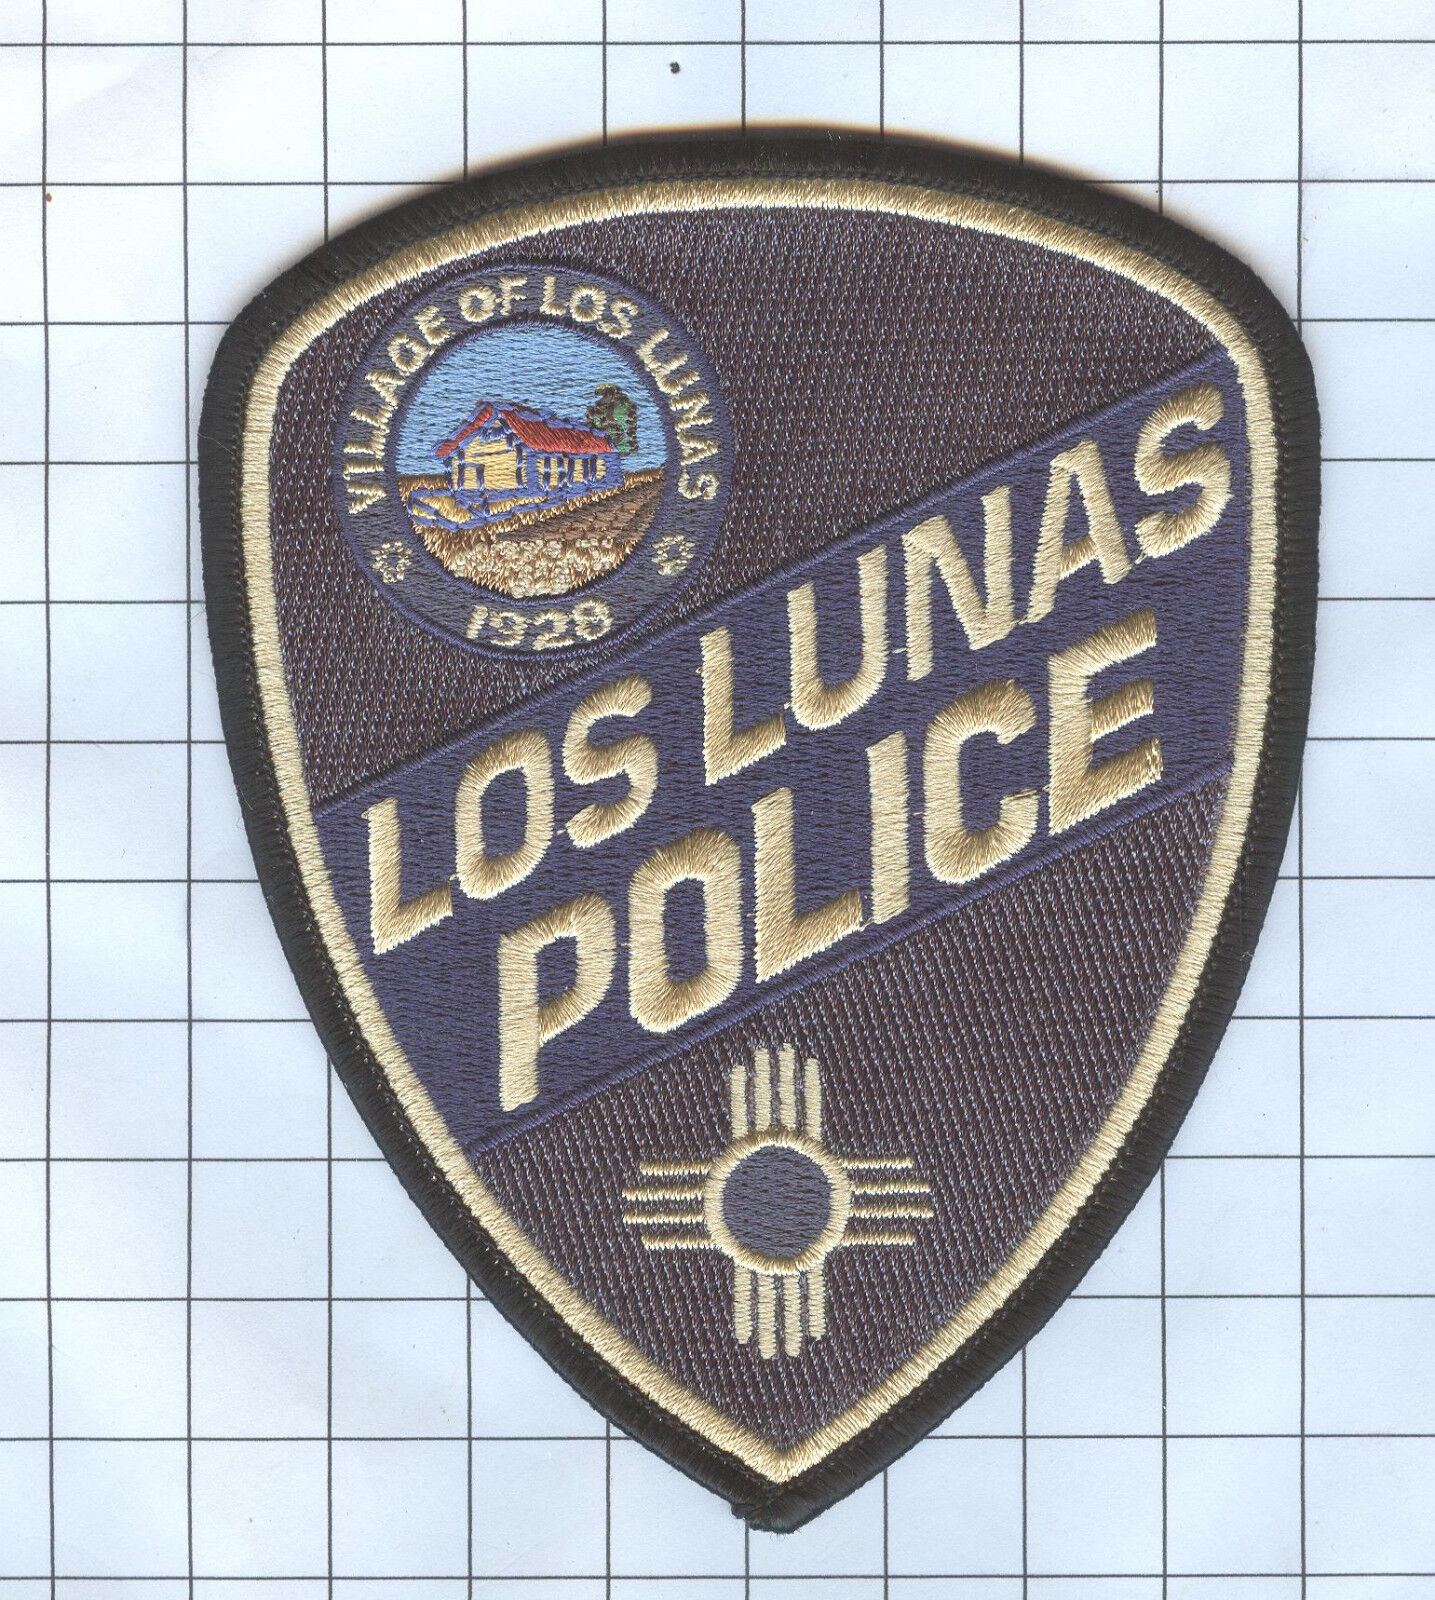 Police Patch  - New Mexico - The Village of Los Lunas NM